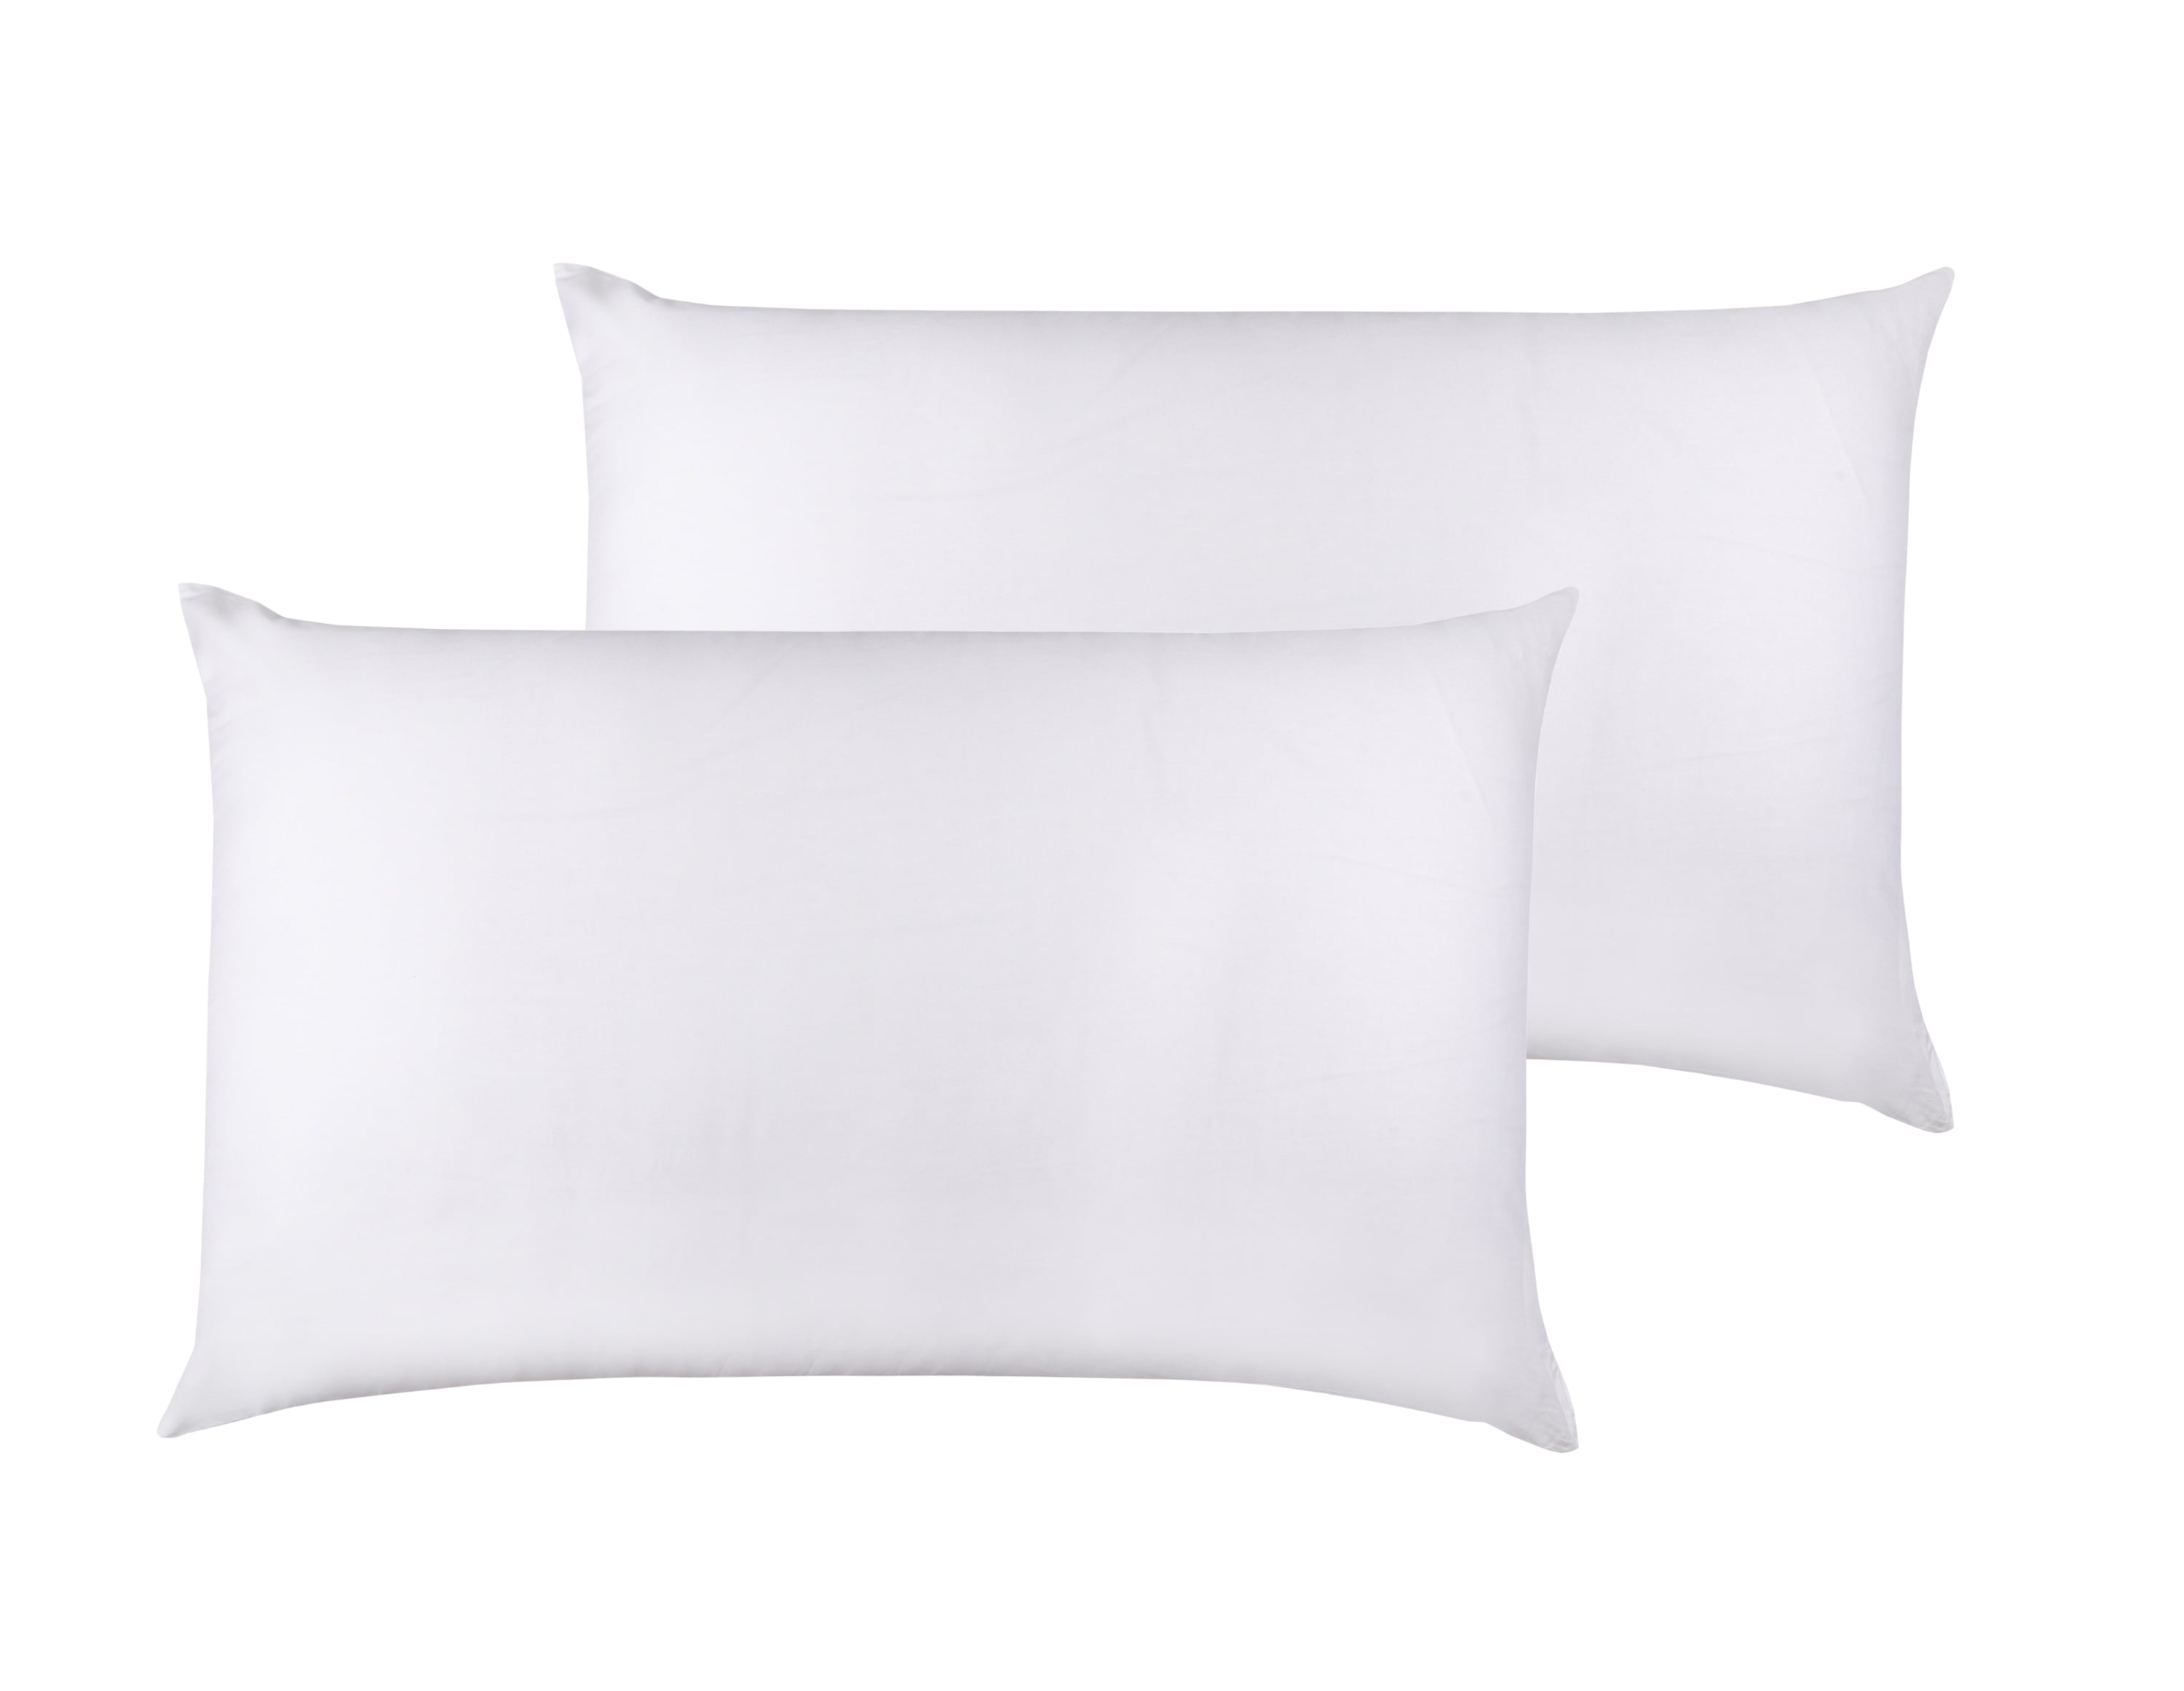 Pair NEW Quality 100% Cotton Plain Dyed Pillowcase 200 Threadcount Soft Luxury 